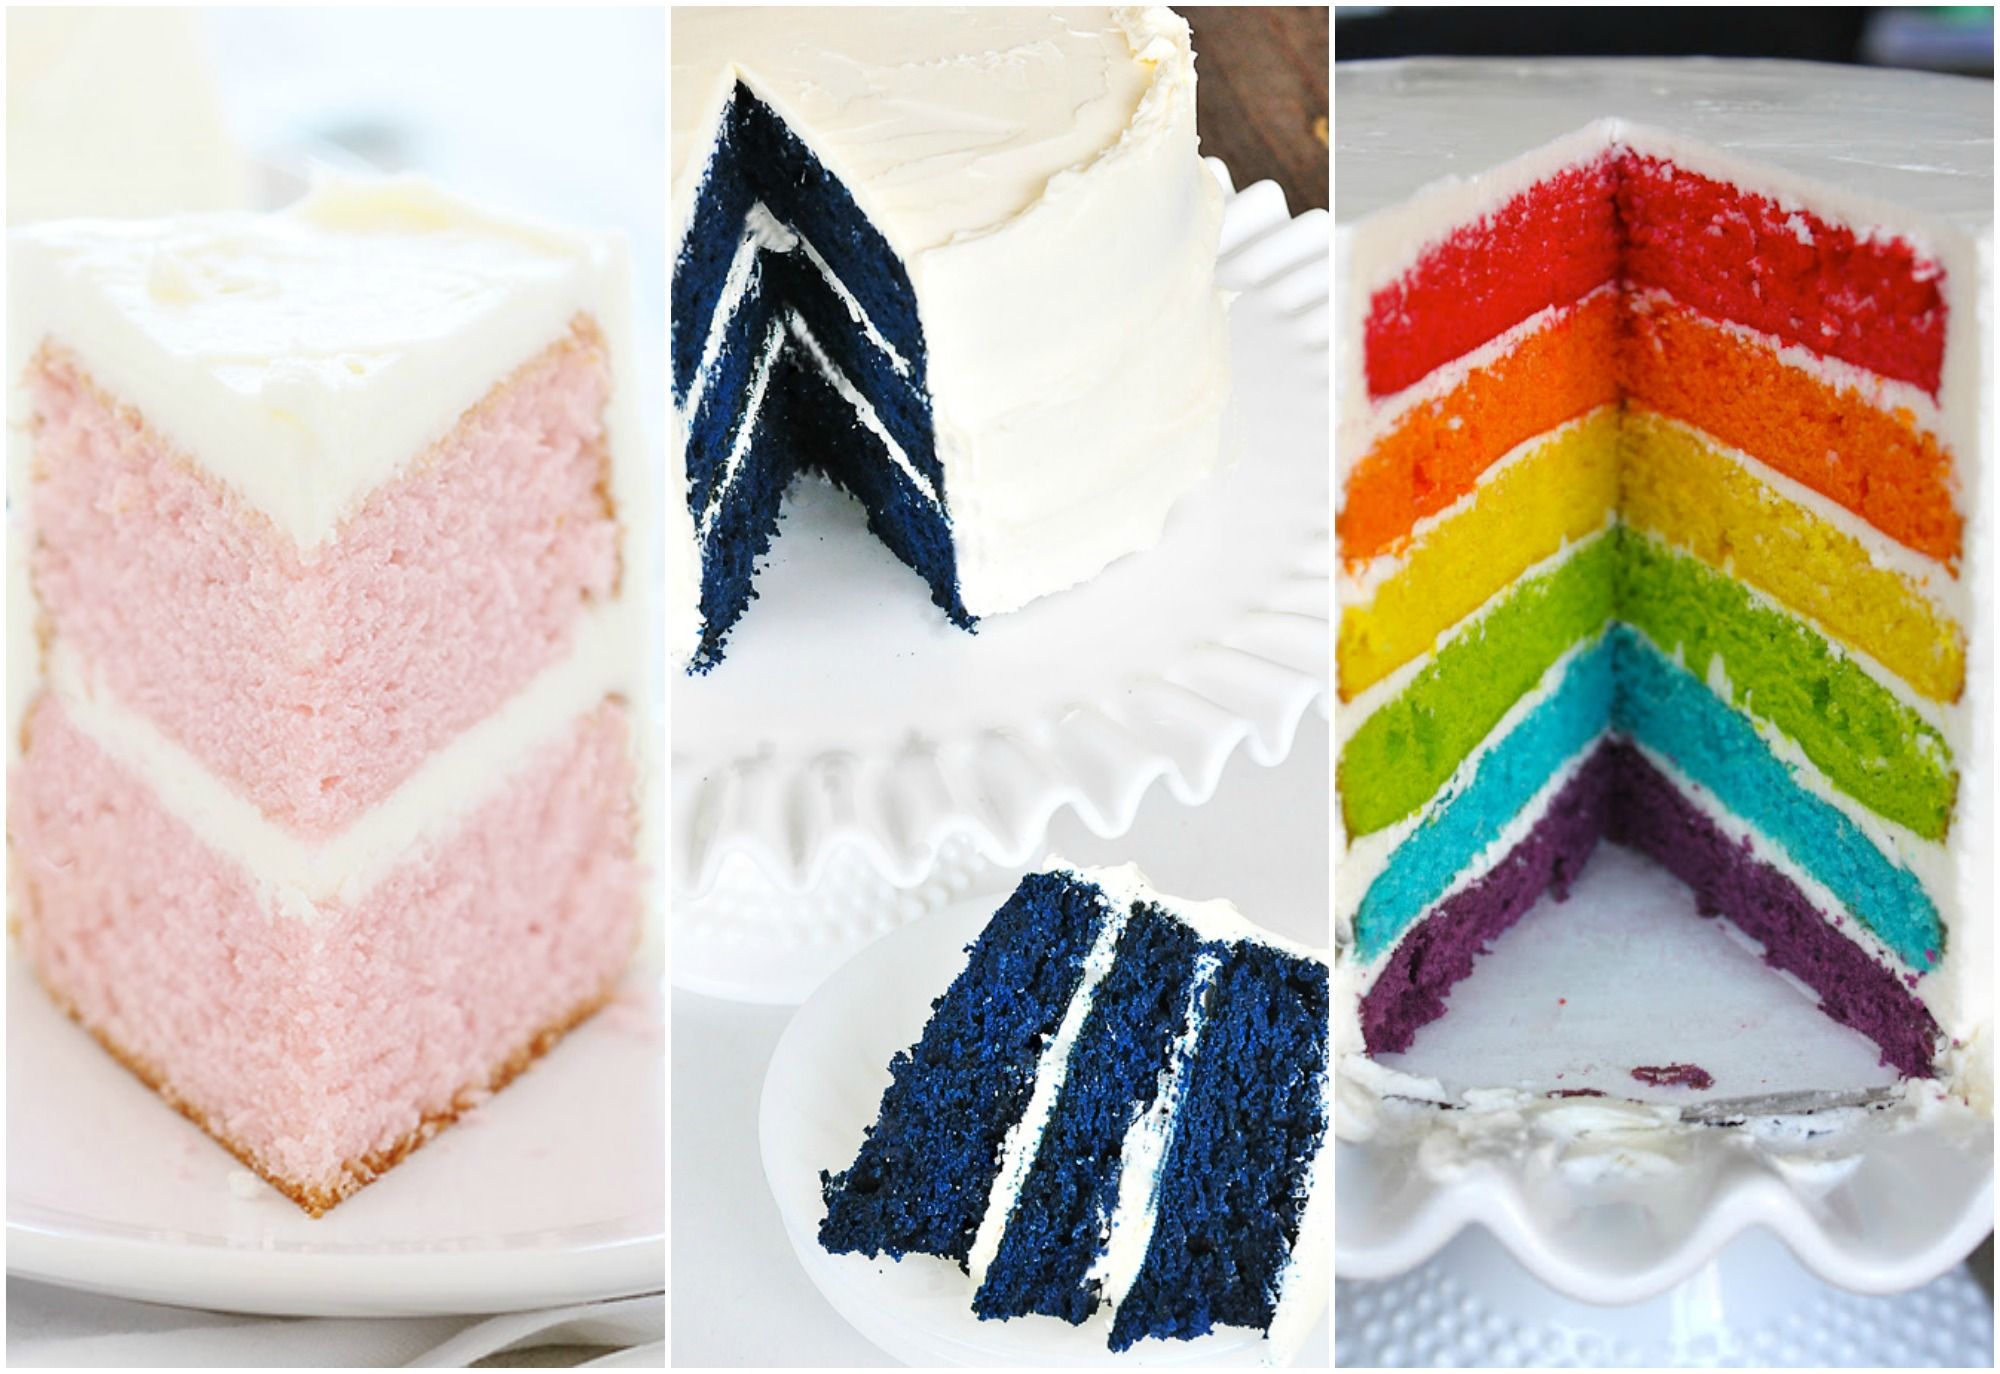 Mia's Brooklyn Bakery - The Royal Blue Velvet Cake Recipe  http://bit.ly/1HMbN79 #cake #recipe #recipes | Facebook